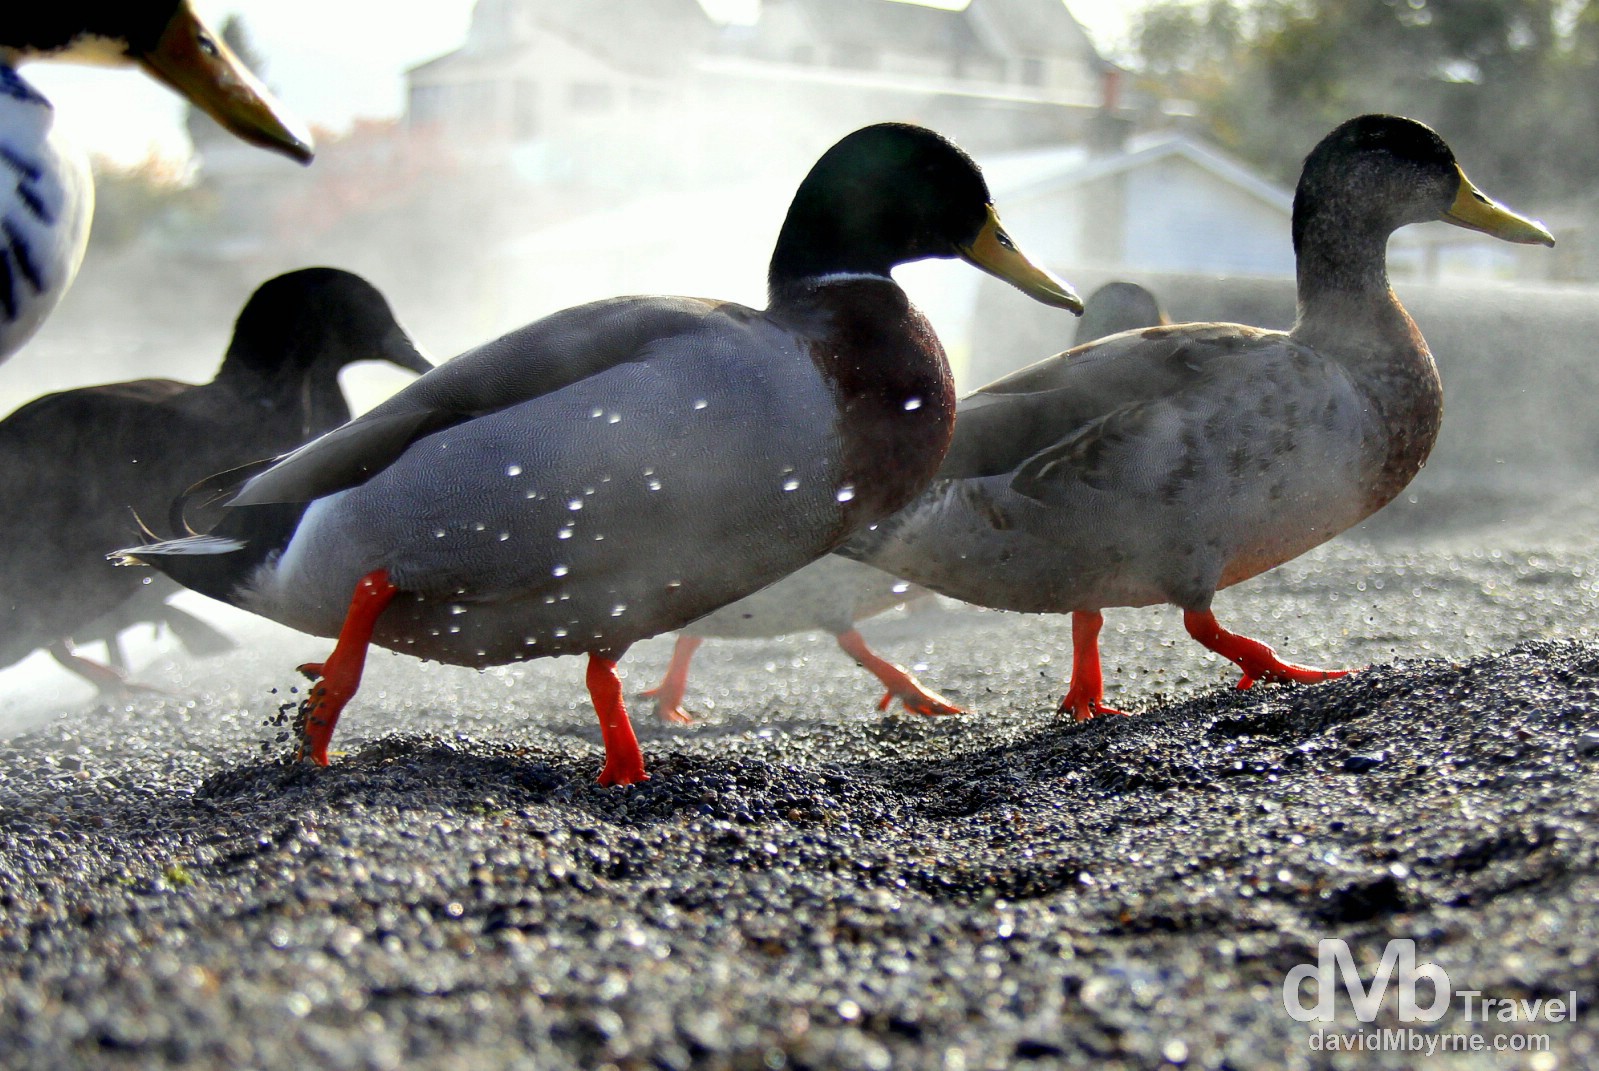 Ducks wading ashore at the thermal beach on the shores of Lake Taupo, North Island, New Zealand. May 7th 2012.